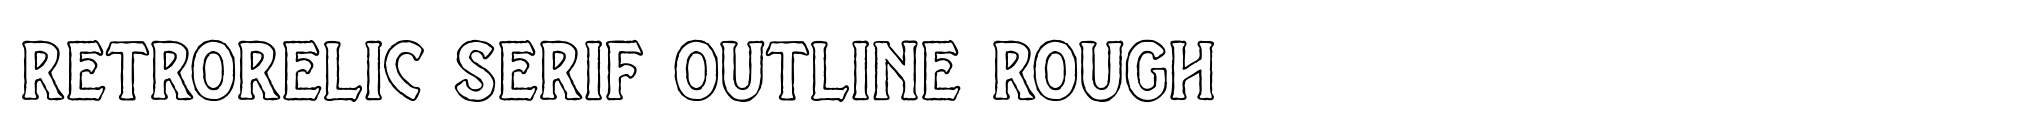 Retrorelic Serif Outline Rough image